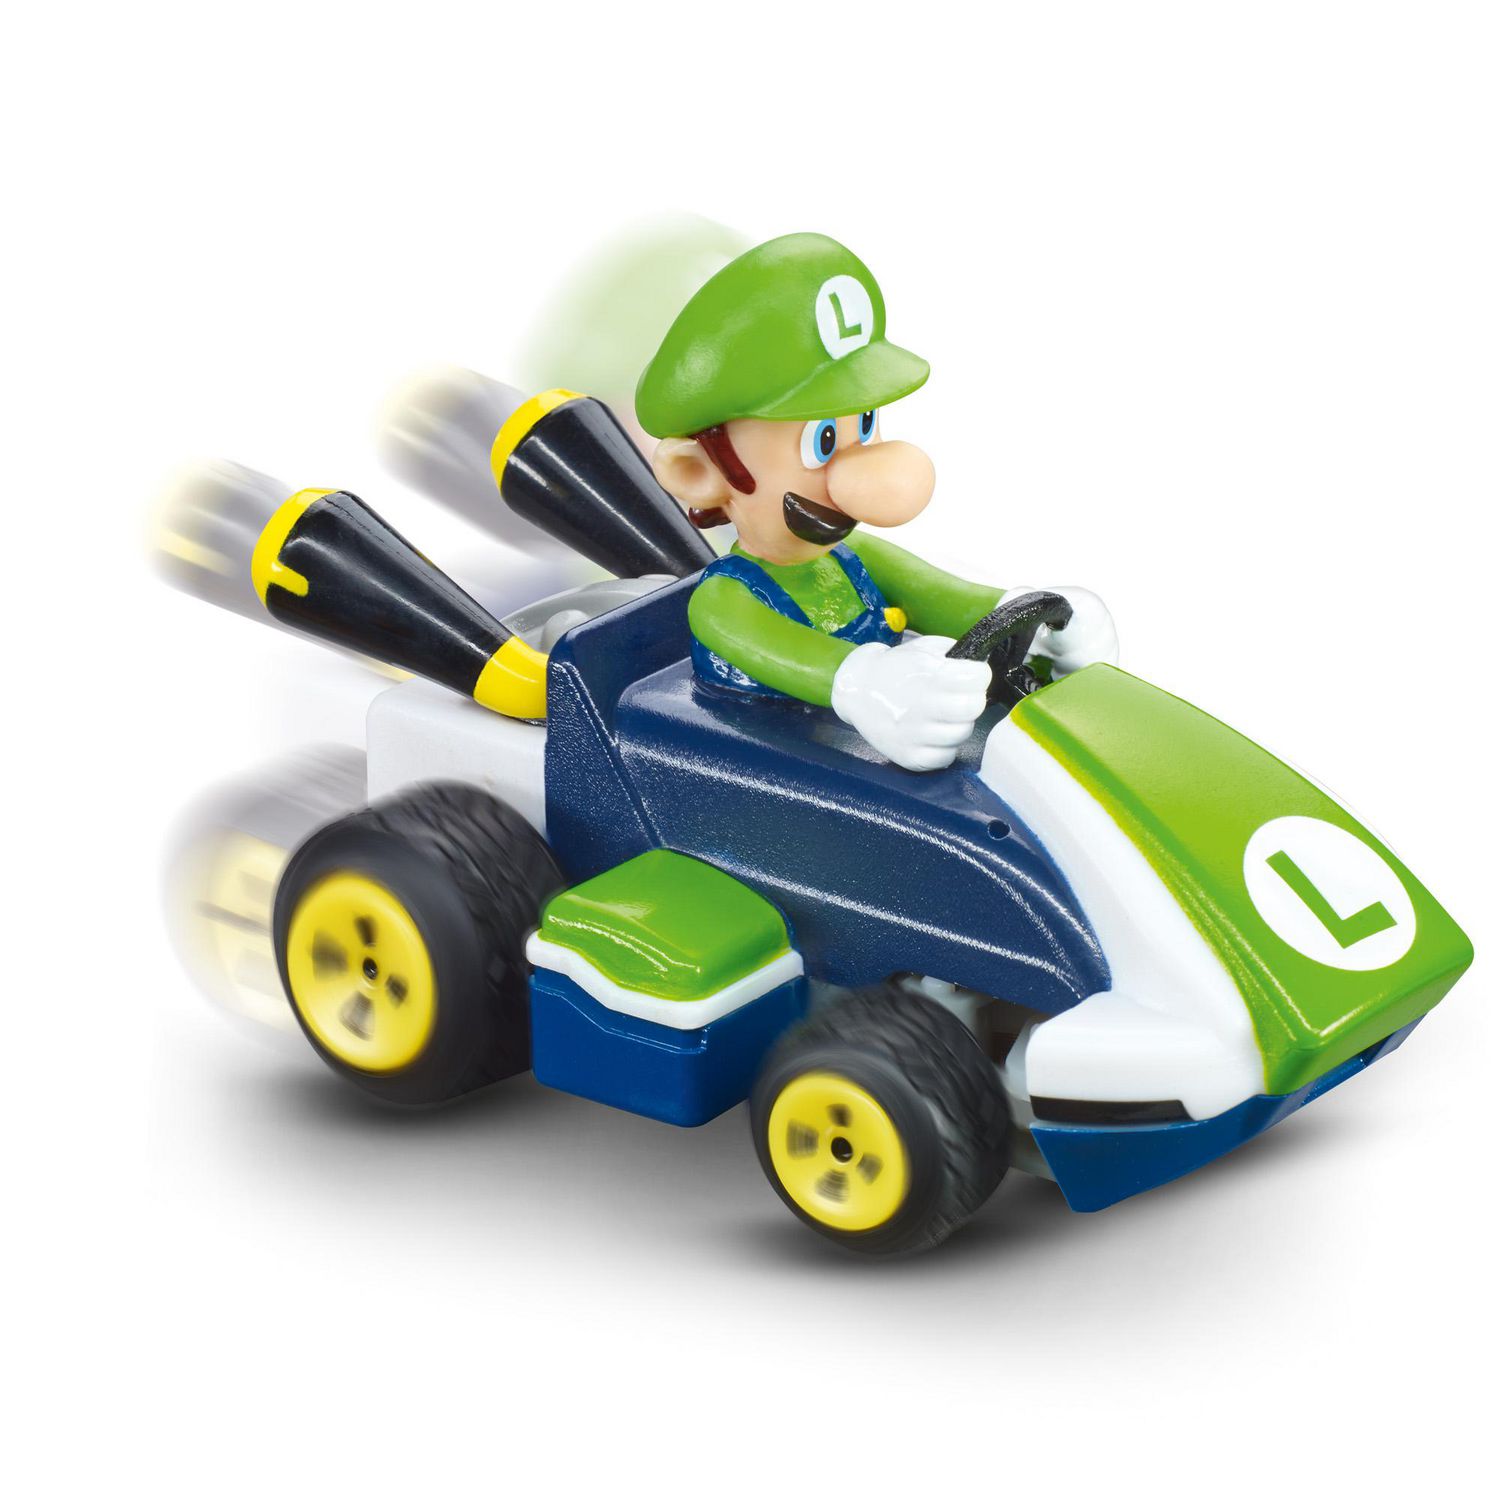 Circuit de voiture Carrera Nintendo Mario Kart ™ - Mario